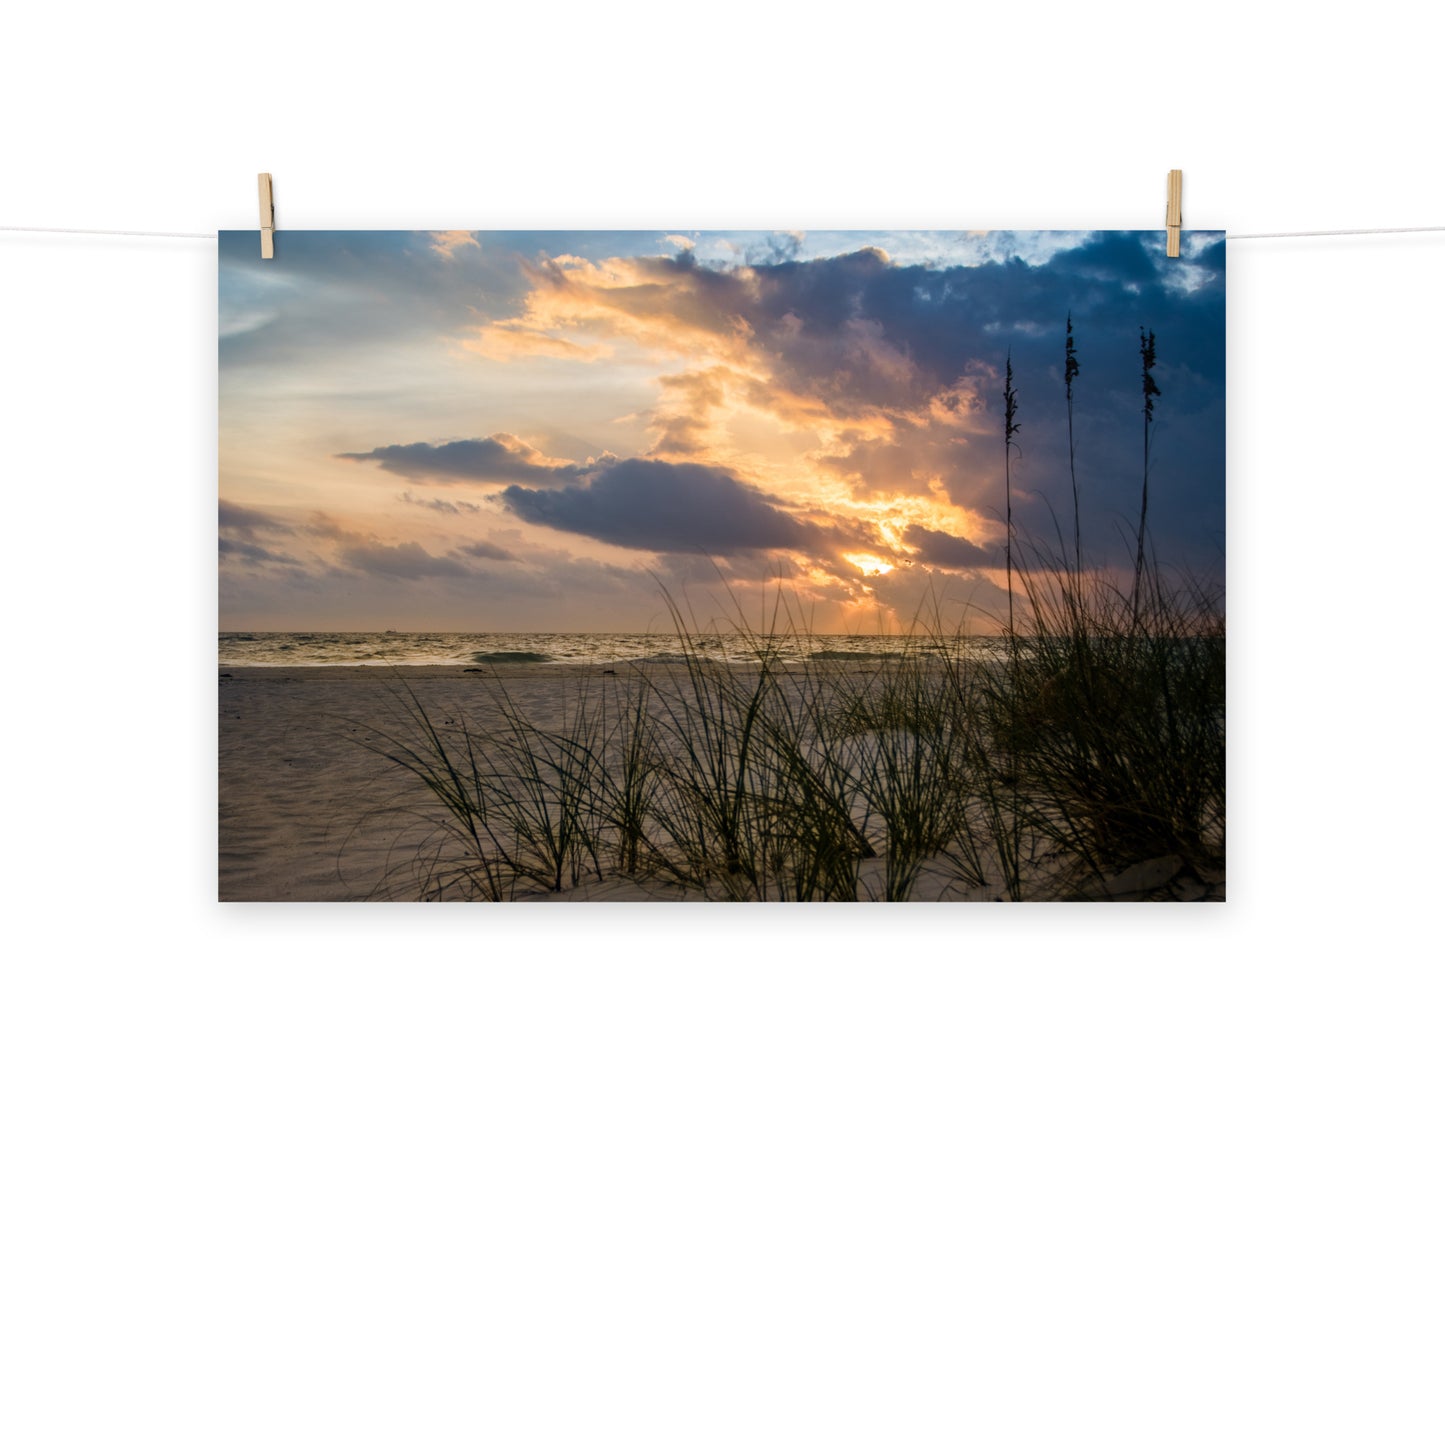 Coastal Modern Wall Art: Peaceful Cloudy Sunset on Beach - Coastal / Seascape Nature / Landscape Photograph Loose / Unframed Wall Art Print - Artwork